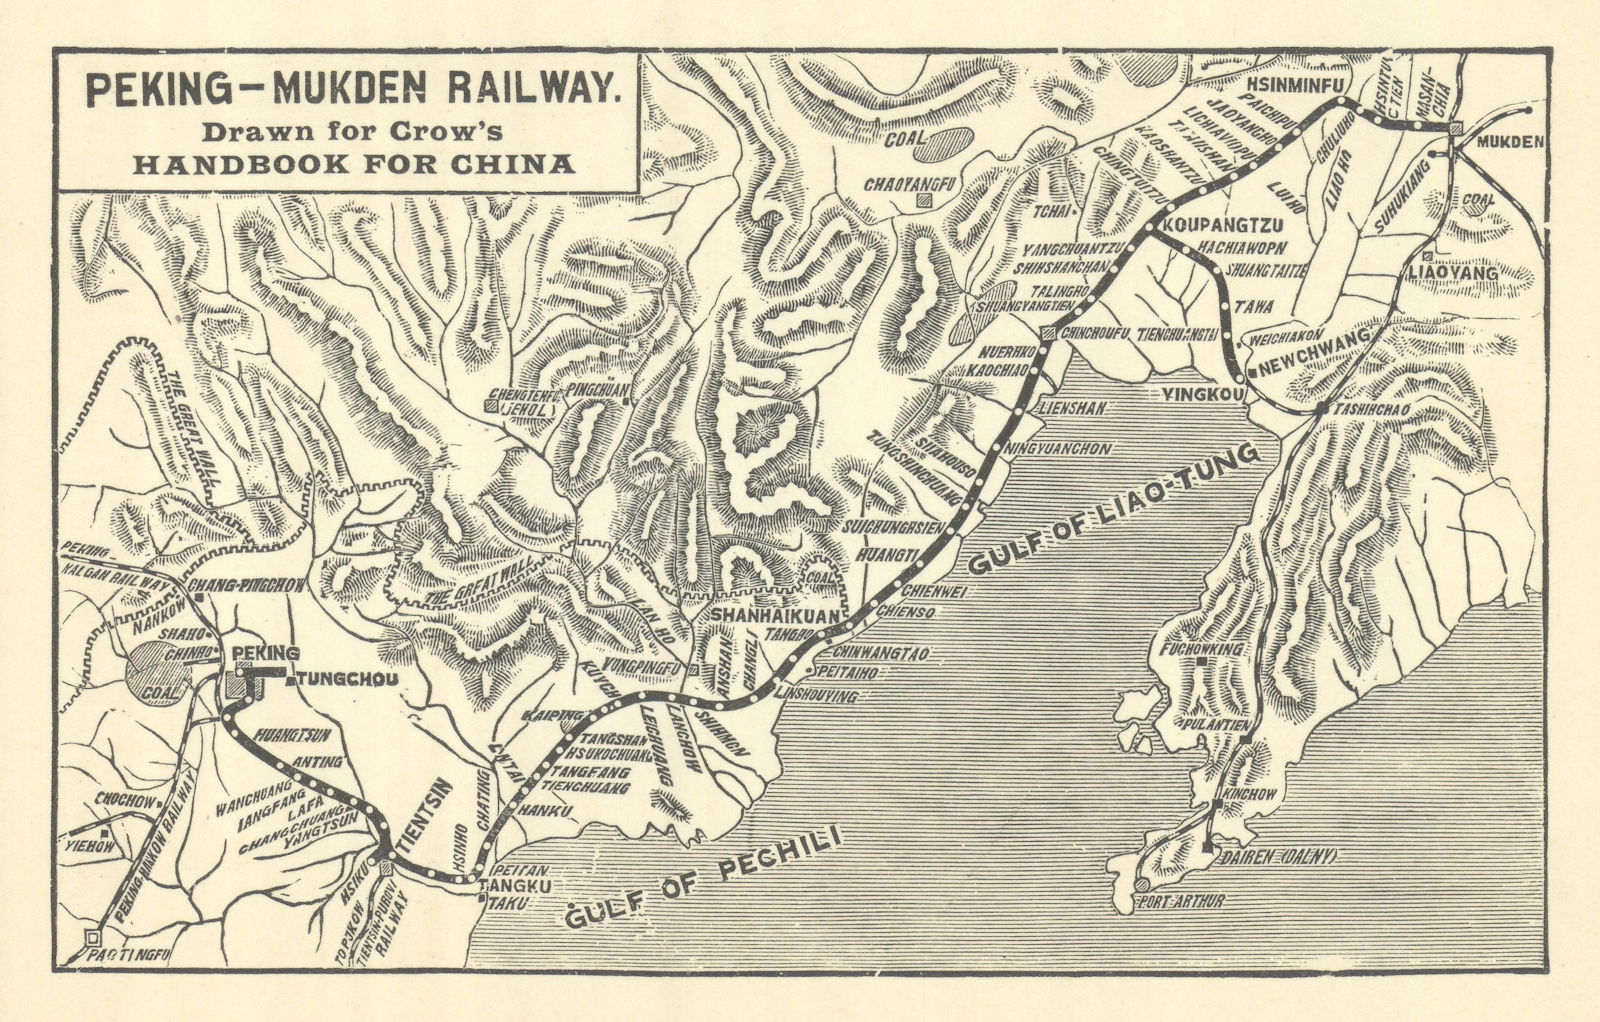 Associate Product Peking - Mukden Railway (Beijing-Shenyang) by Carl Crow 1921 old antique map